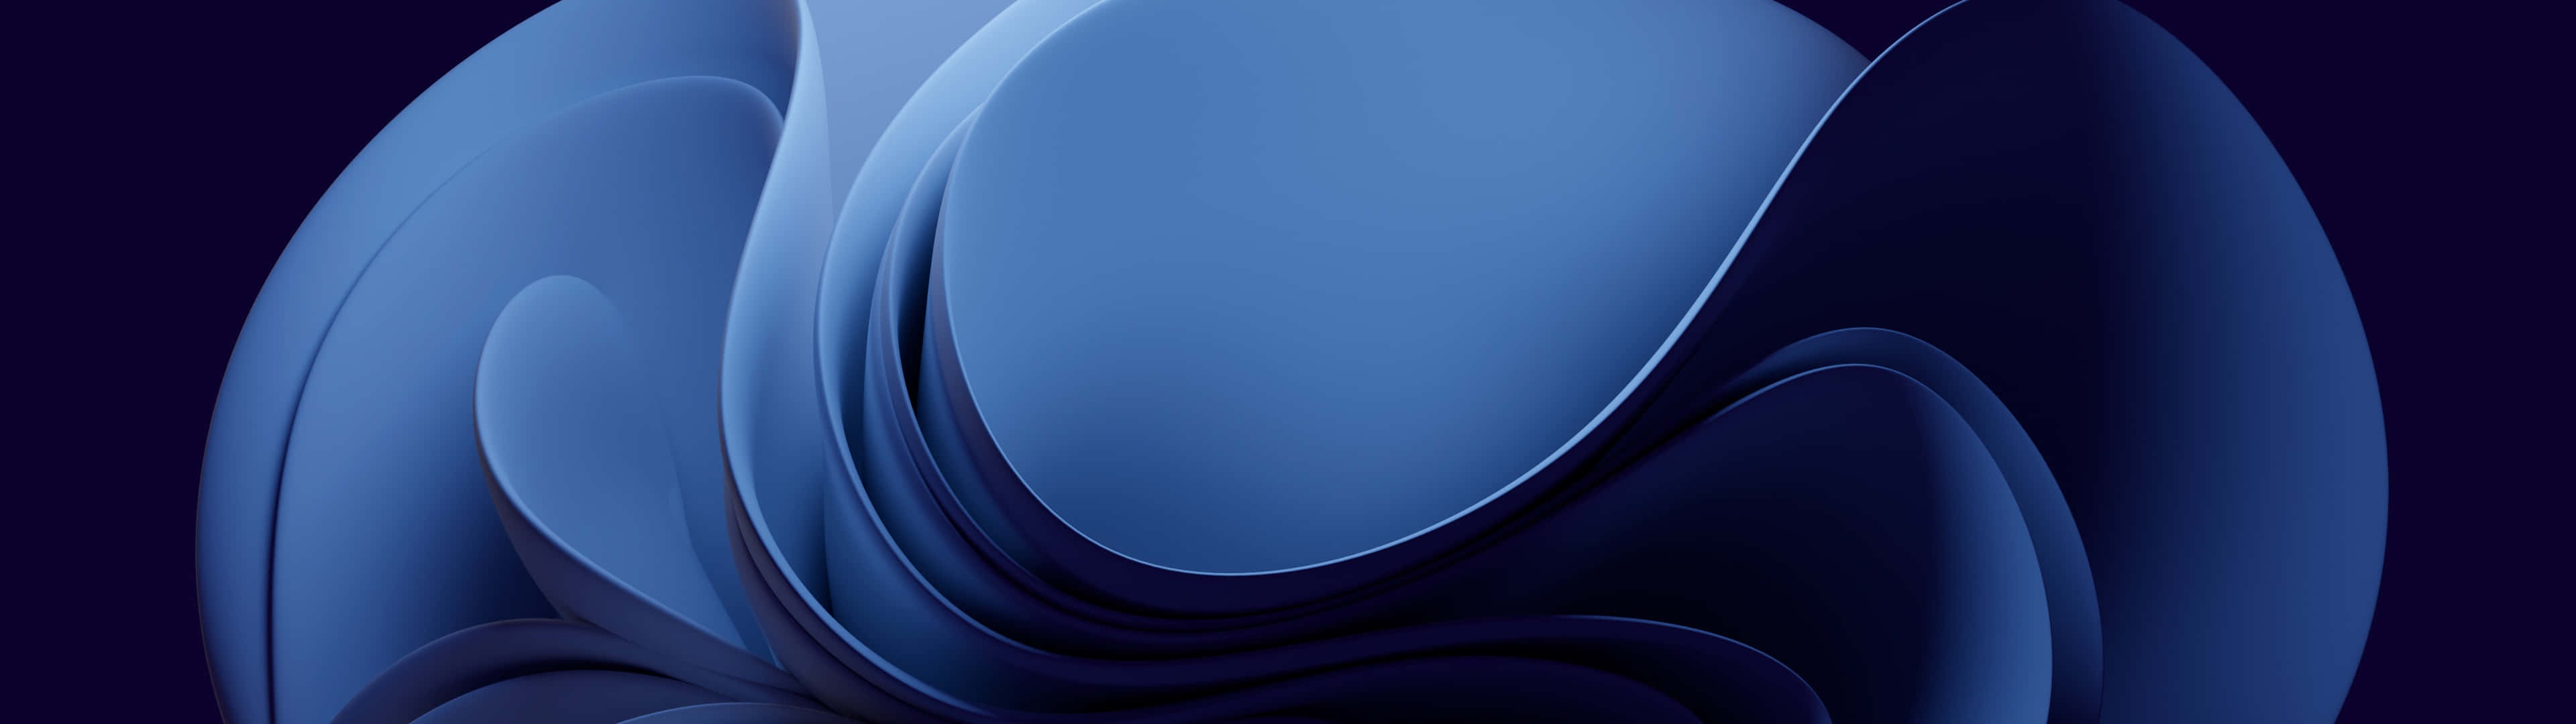 Blue Swirl Ultra Hd Dual Monitor - Wallpaper Wallpaper